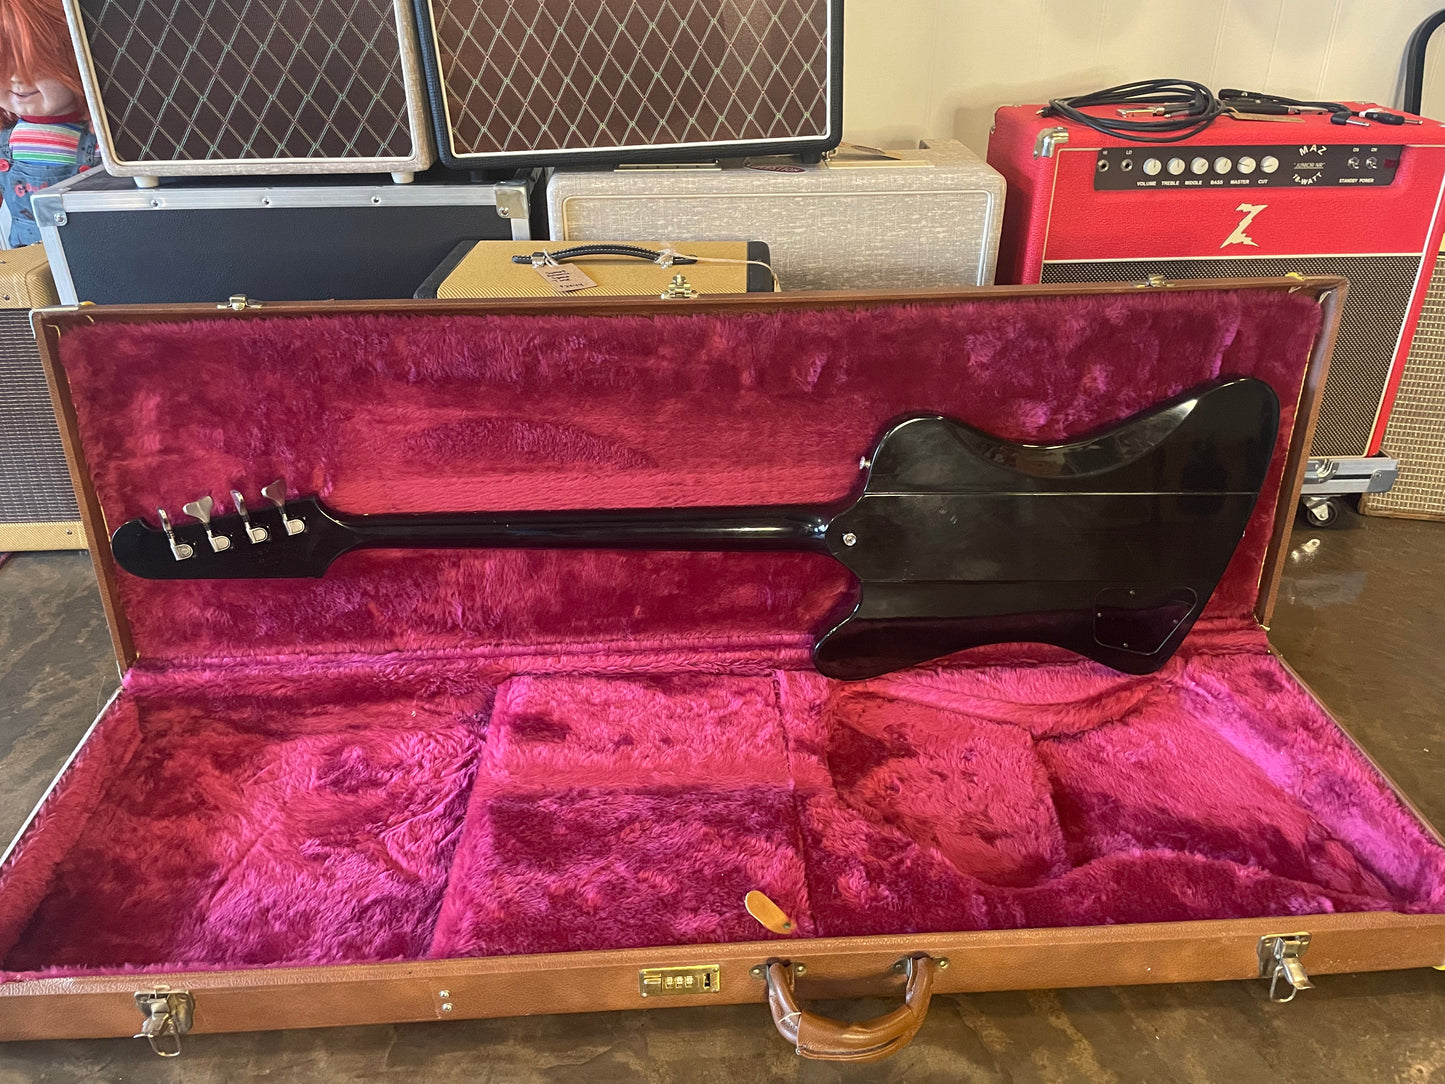 1990 Gibson Thunderbird IV Bass